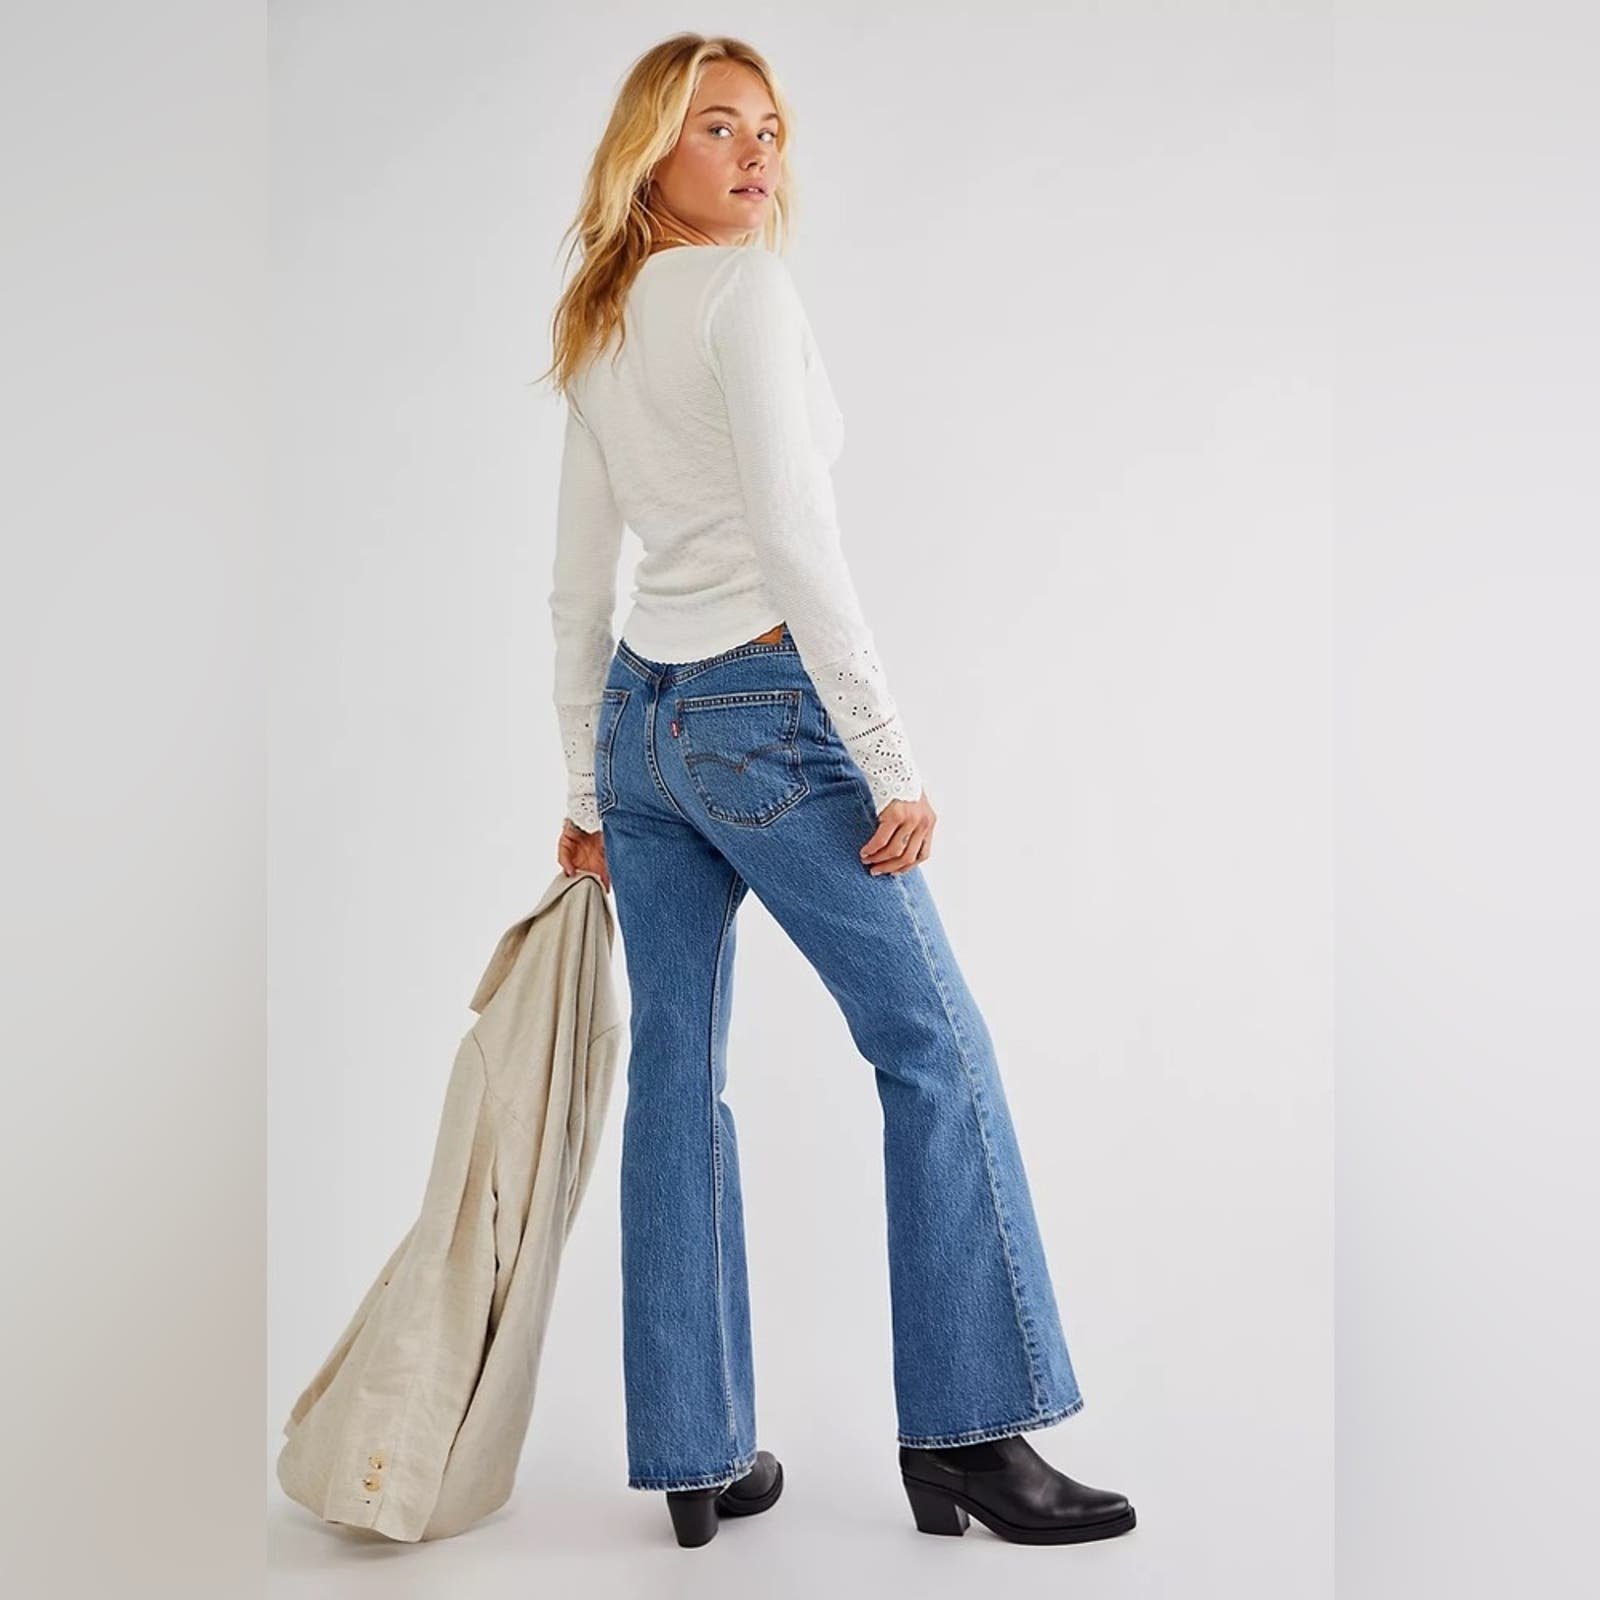 Popular NWT Levi’s 70’s Flare High Rise Flare Jeans Premium Sonoma Walks Womens 27 $130 lrXhFHhjA outlet online shop